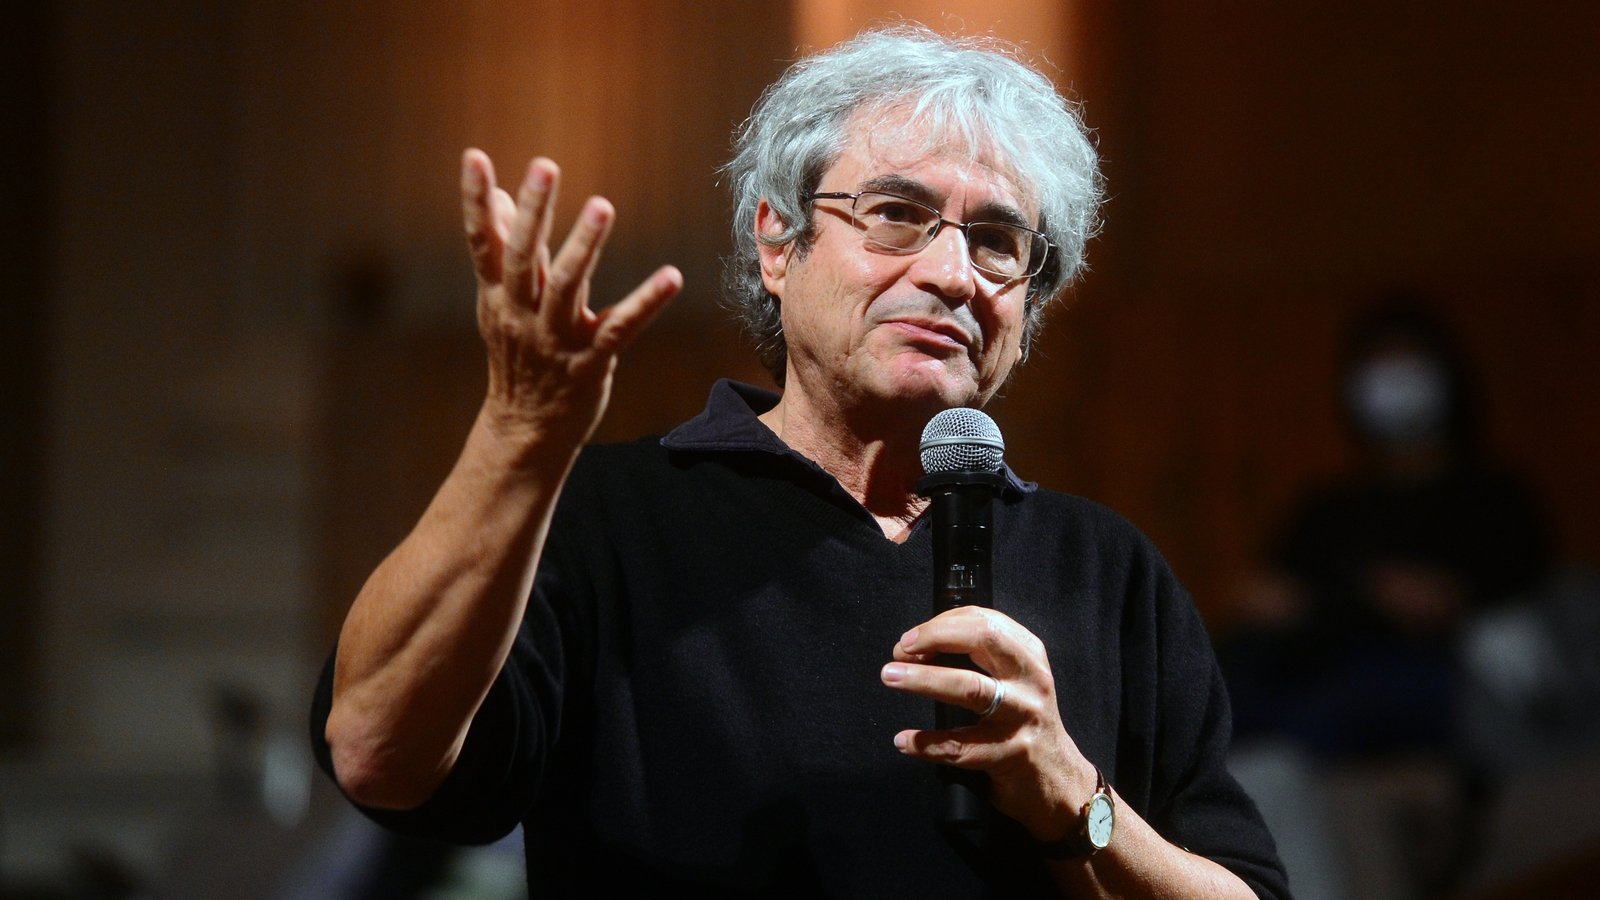 Carlo Rovelli: 'Science is where revolutions happen